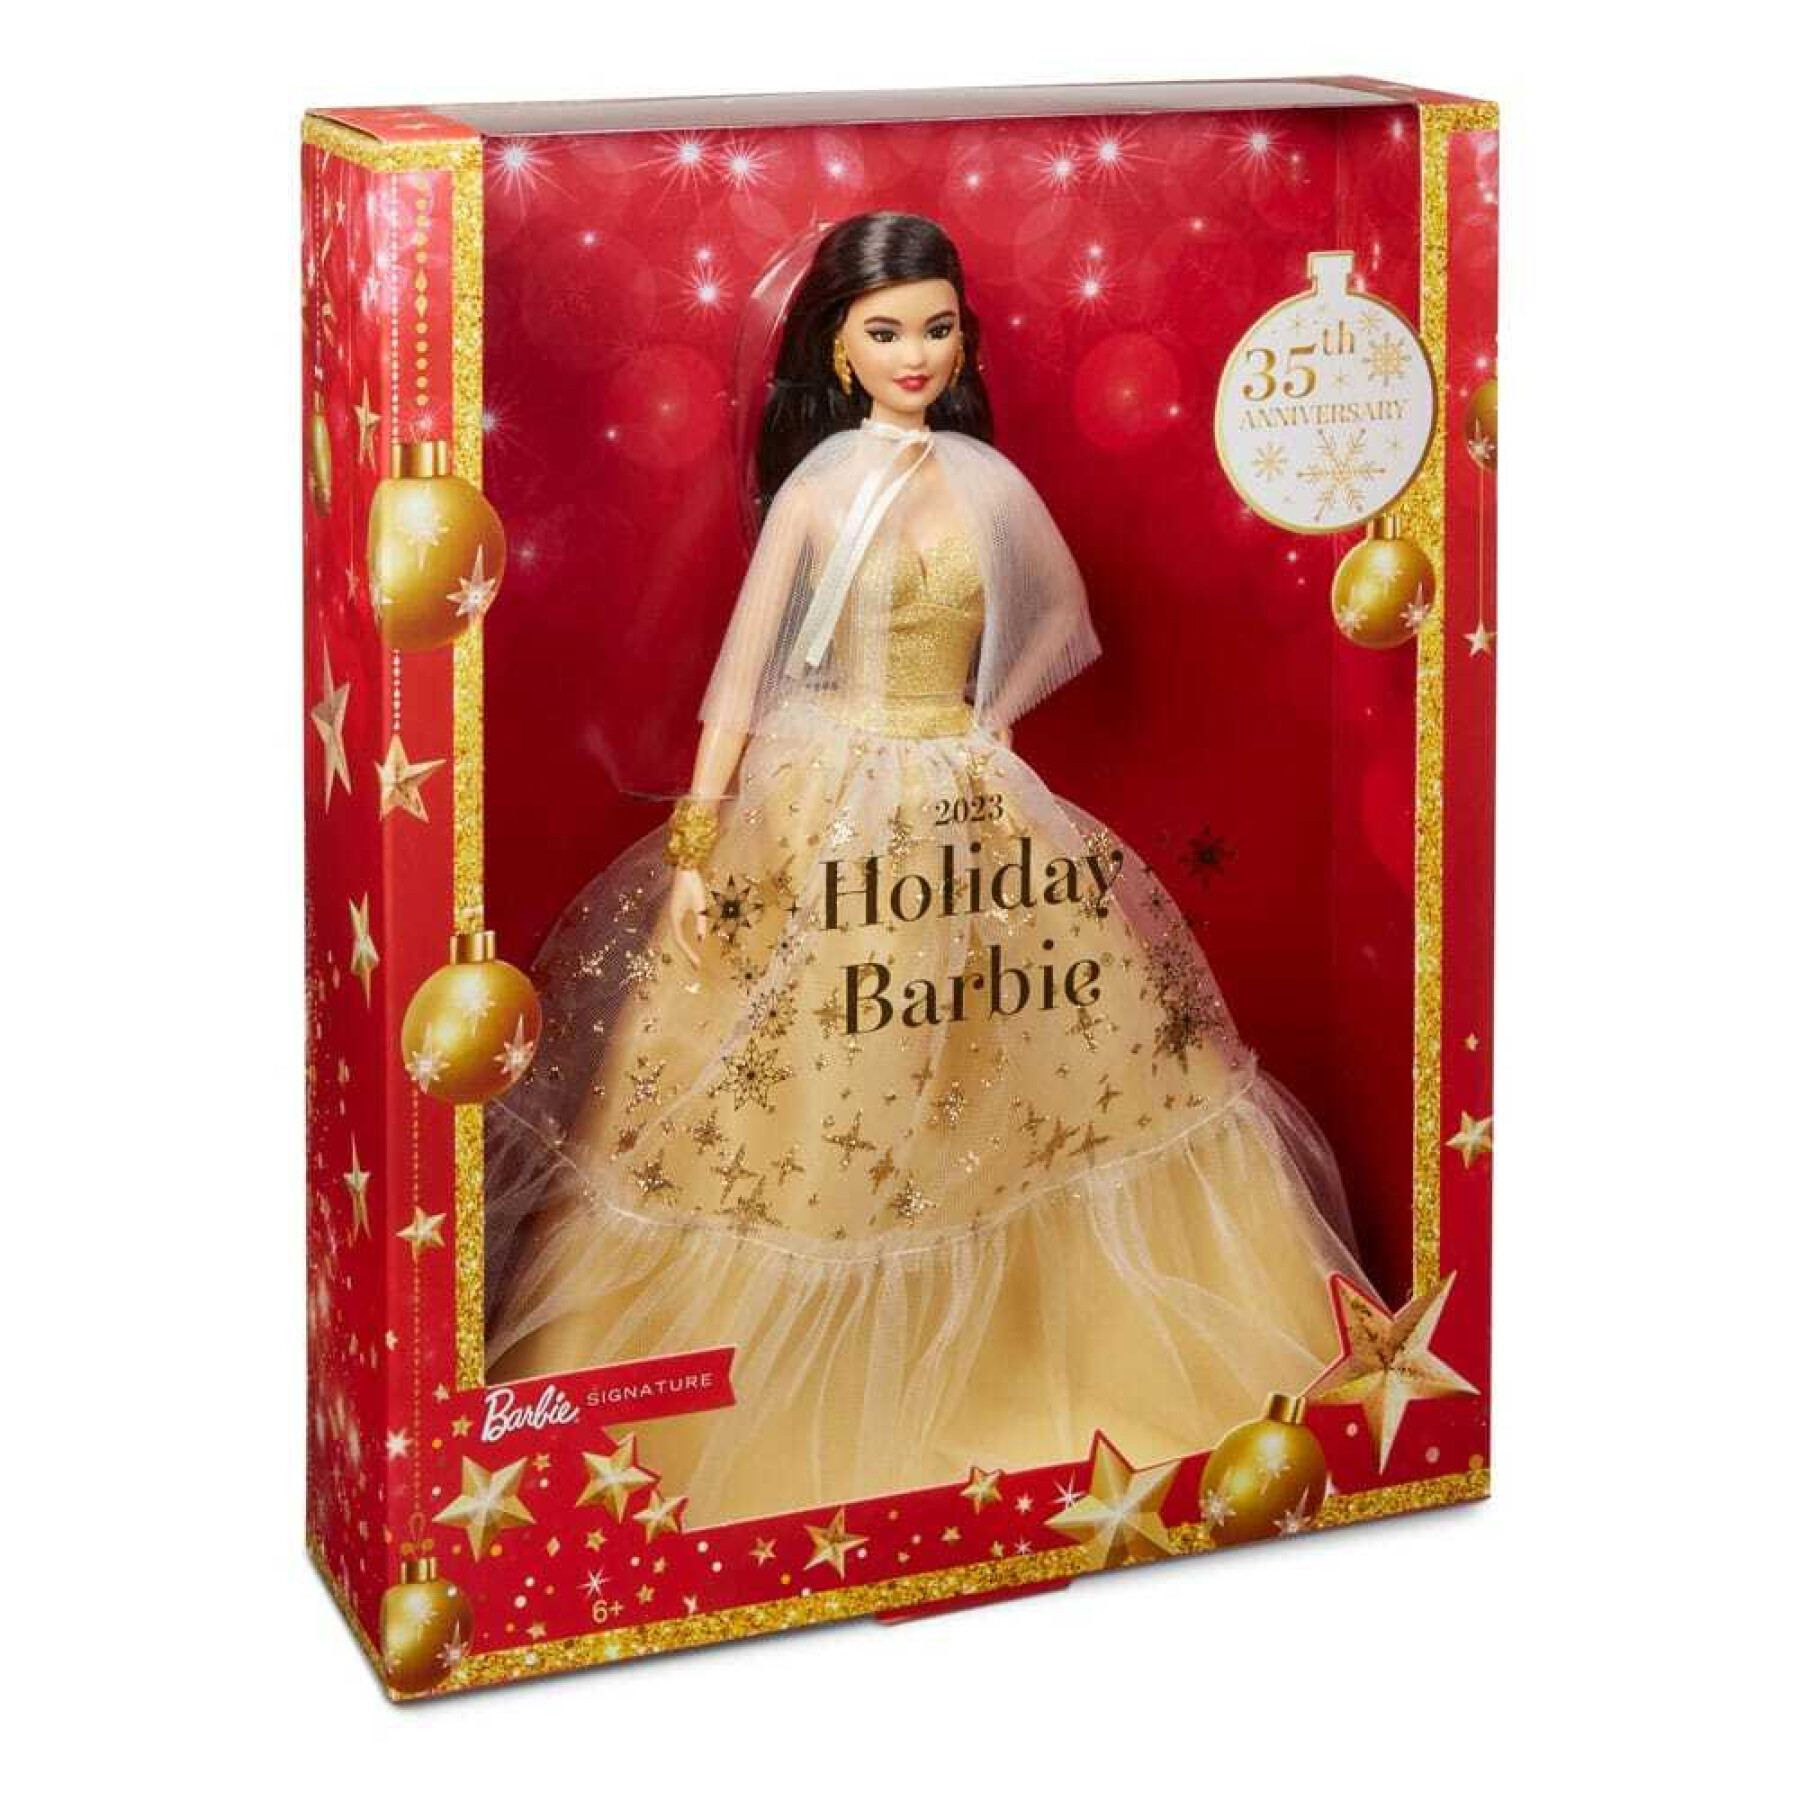 Signature doll Mattel Barbie 2023 Holiday Barbie #4